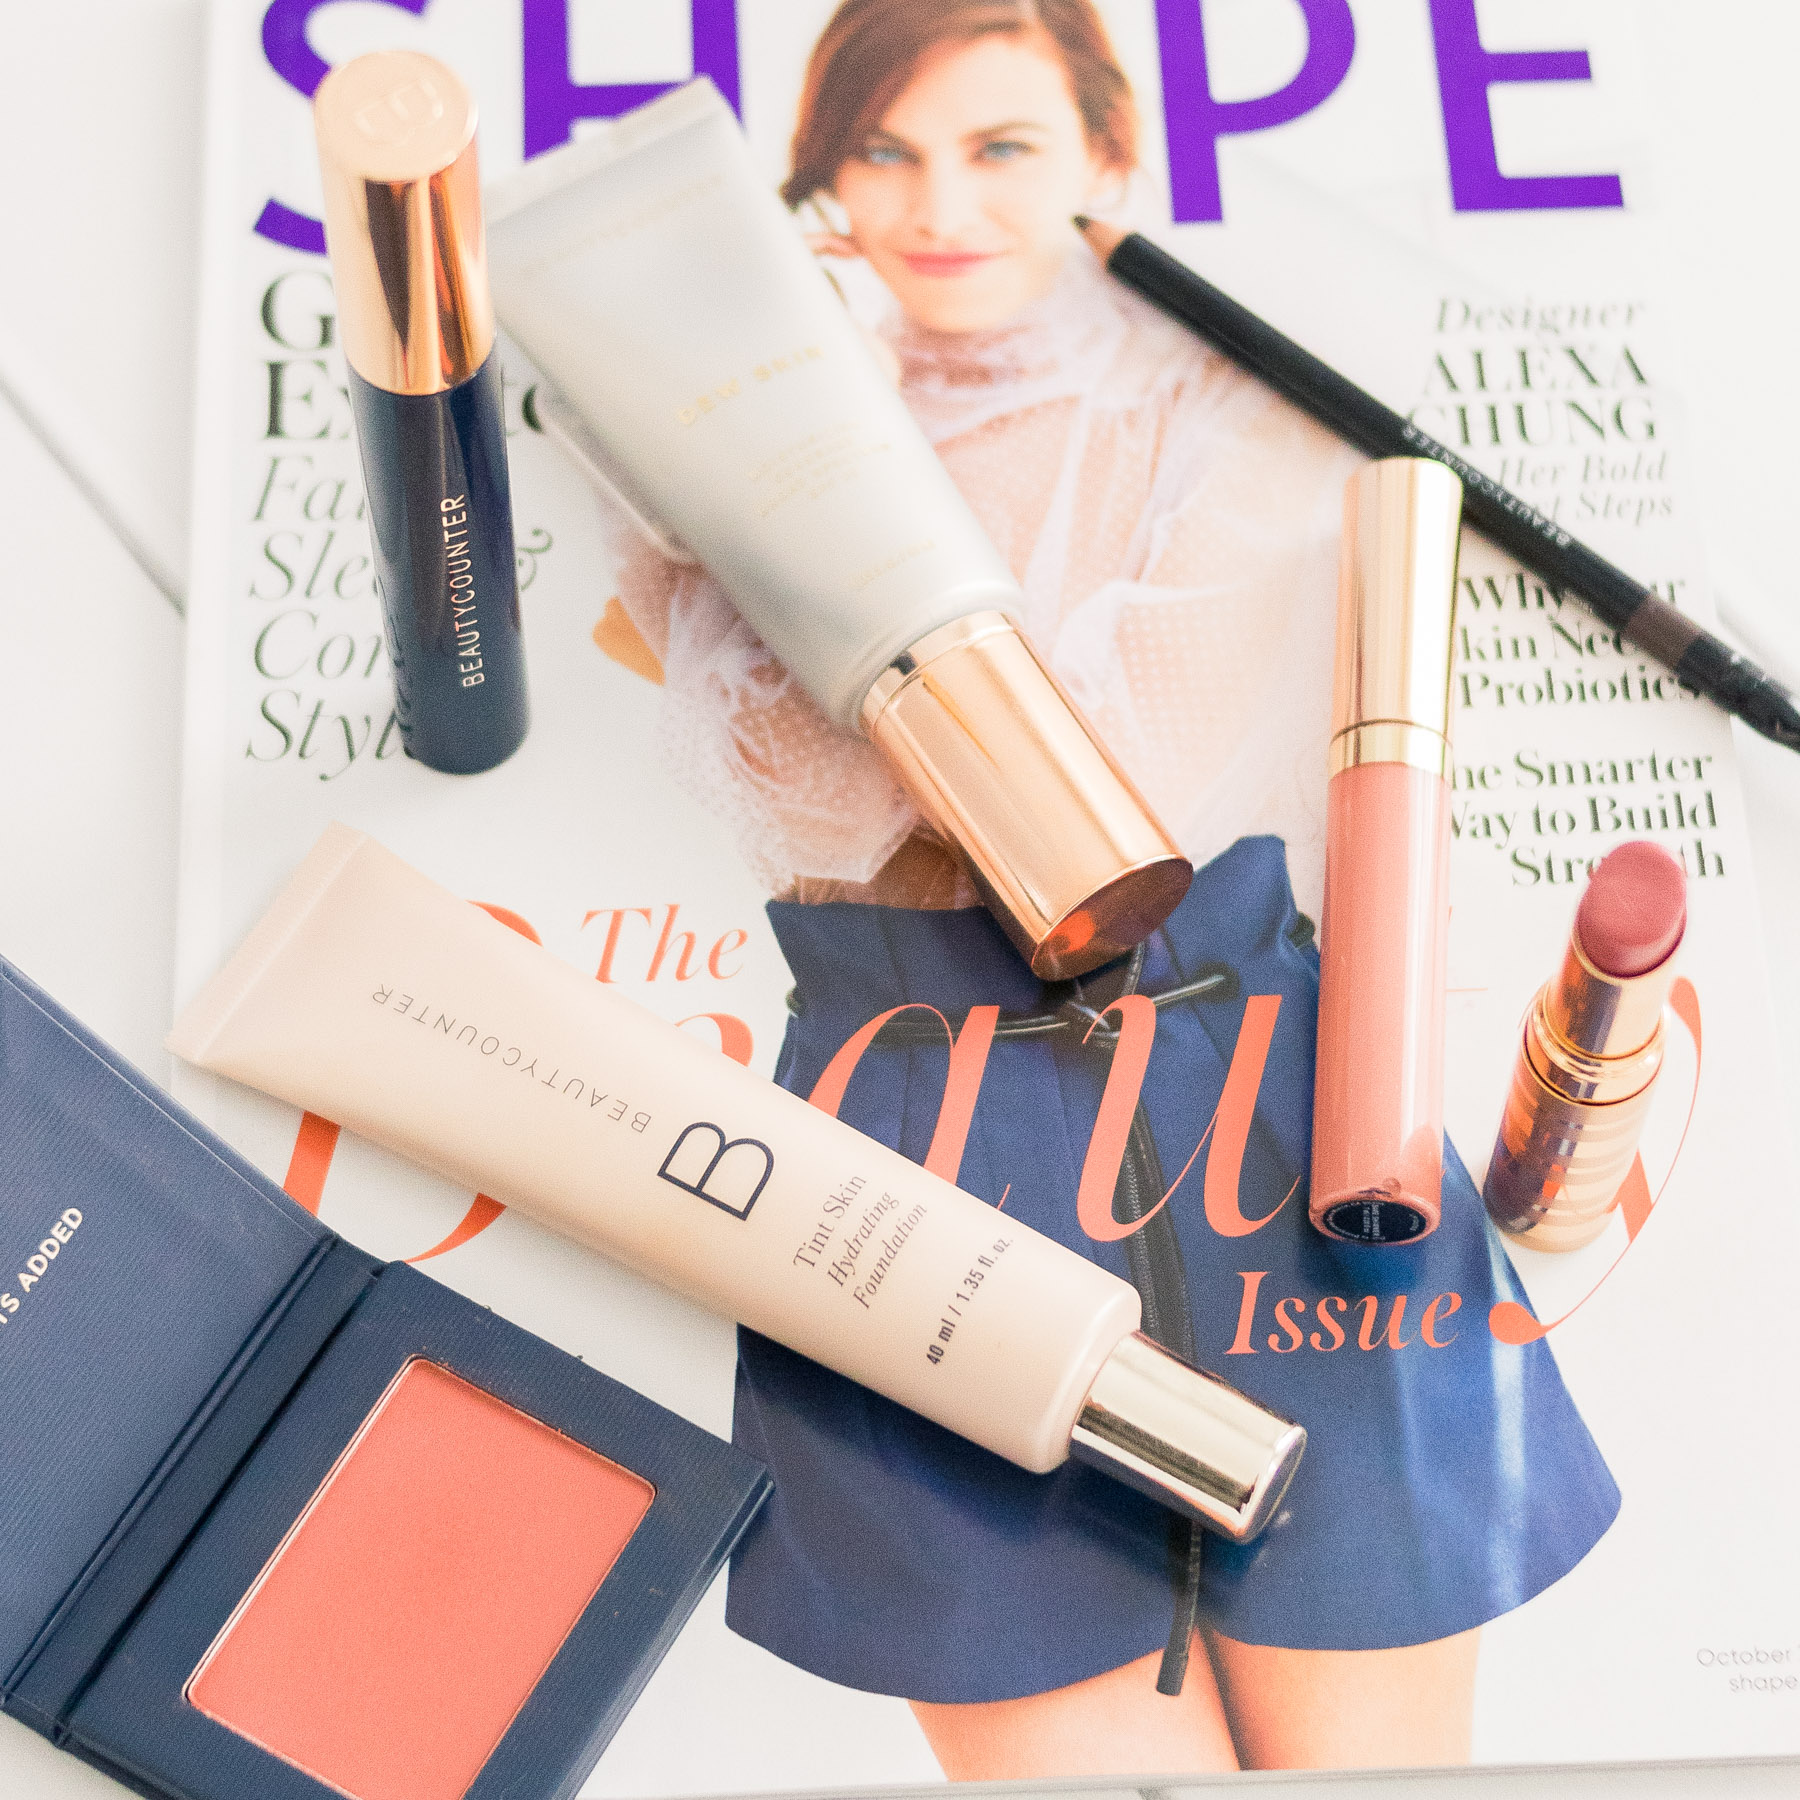 Beautycounter products on October 2018 SHAPE magazine